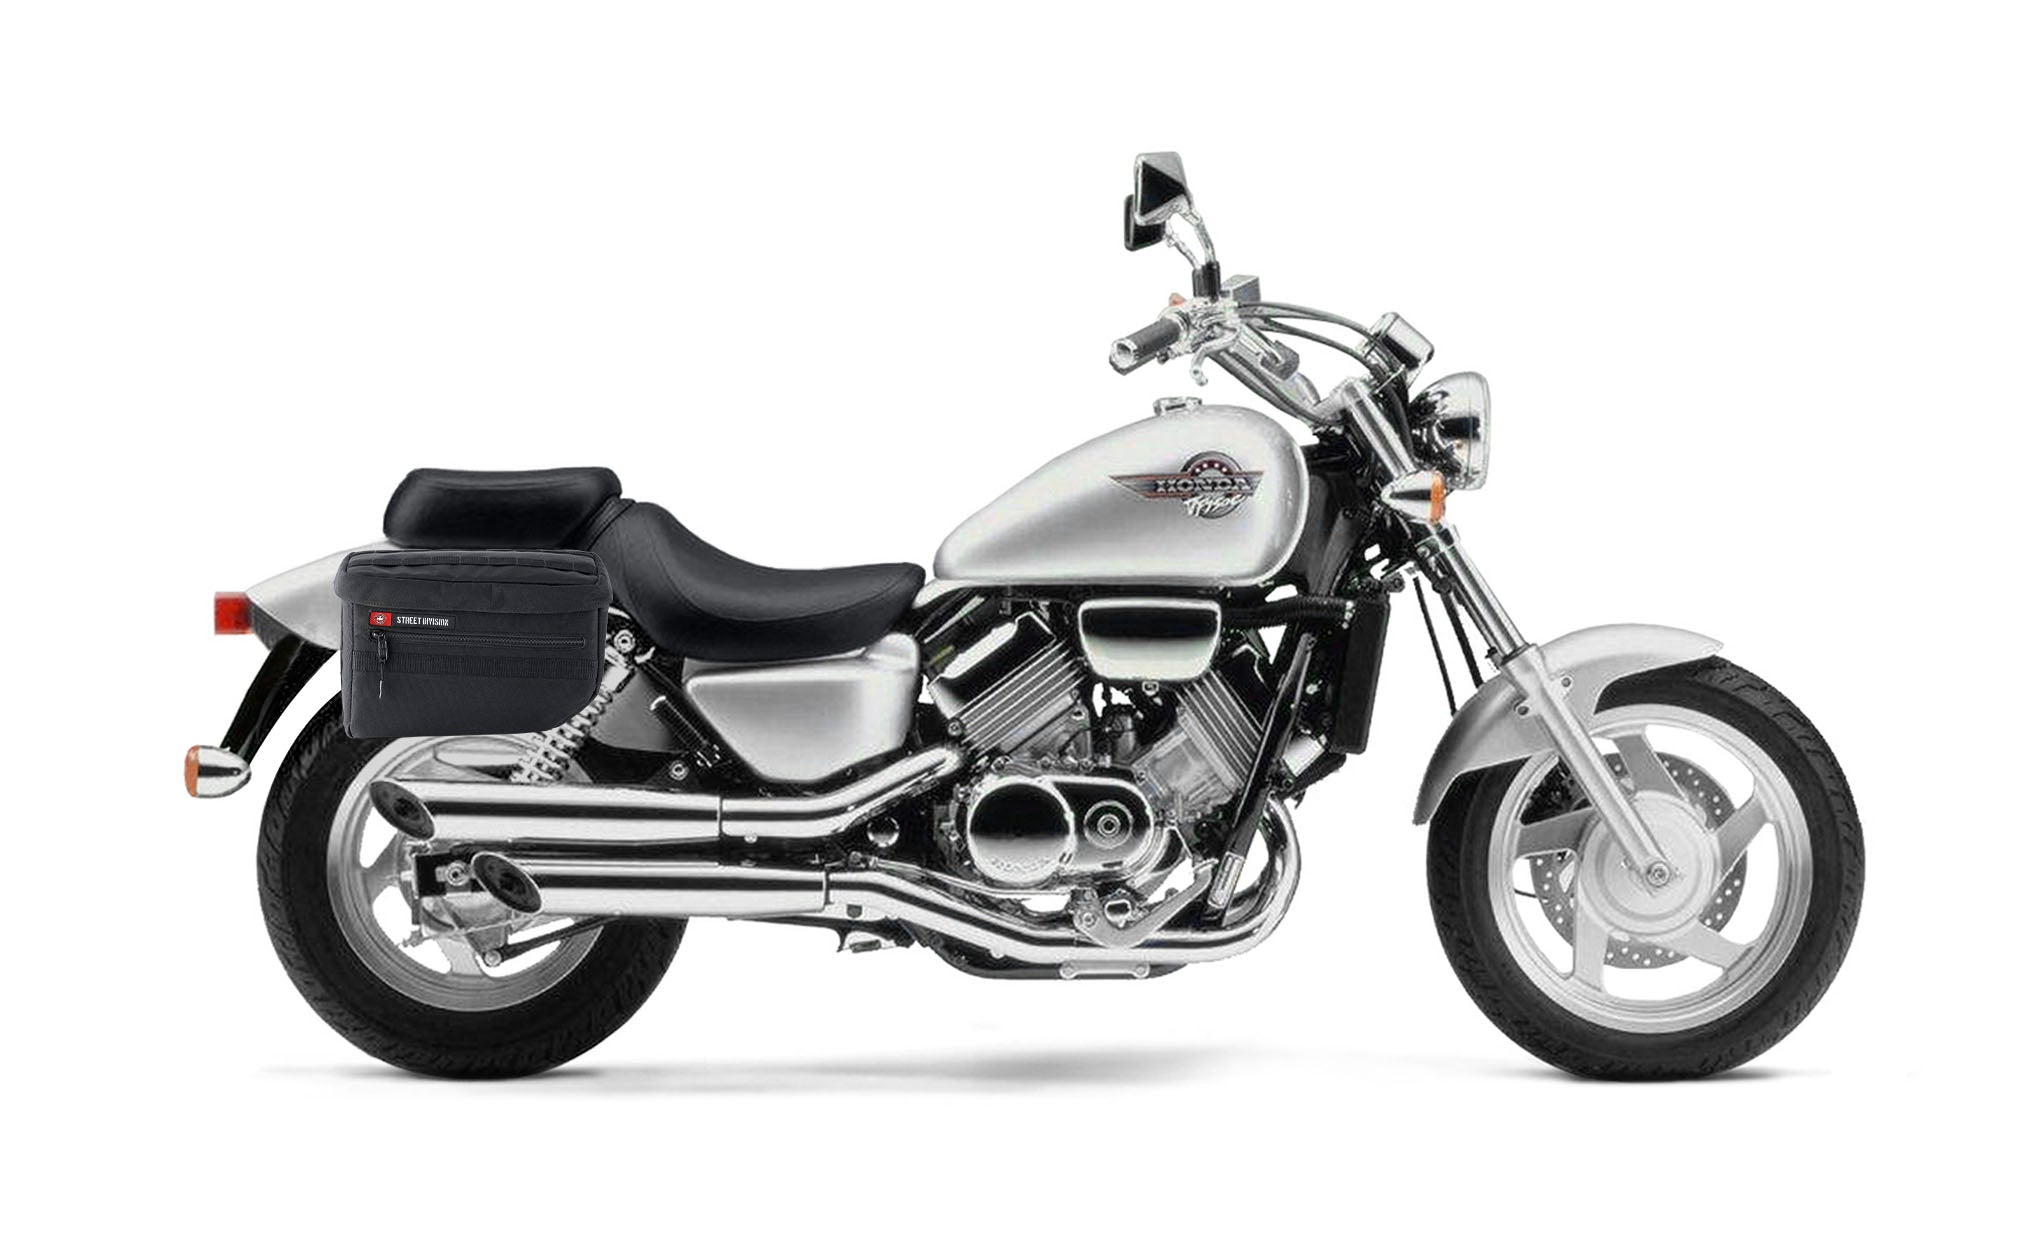 Viking Patriot Large Honda Magna 750 Vf750C Motorcycle Throw Over Saddlebags on Bike Photo @expand